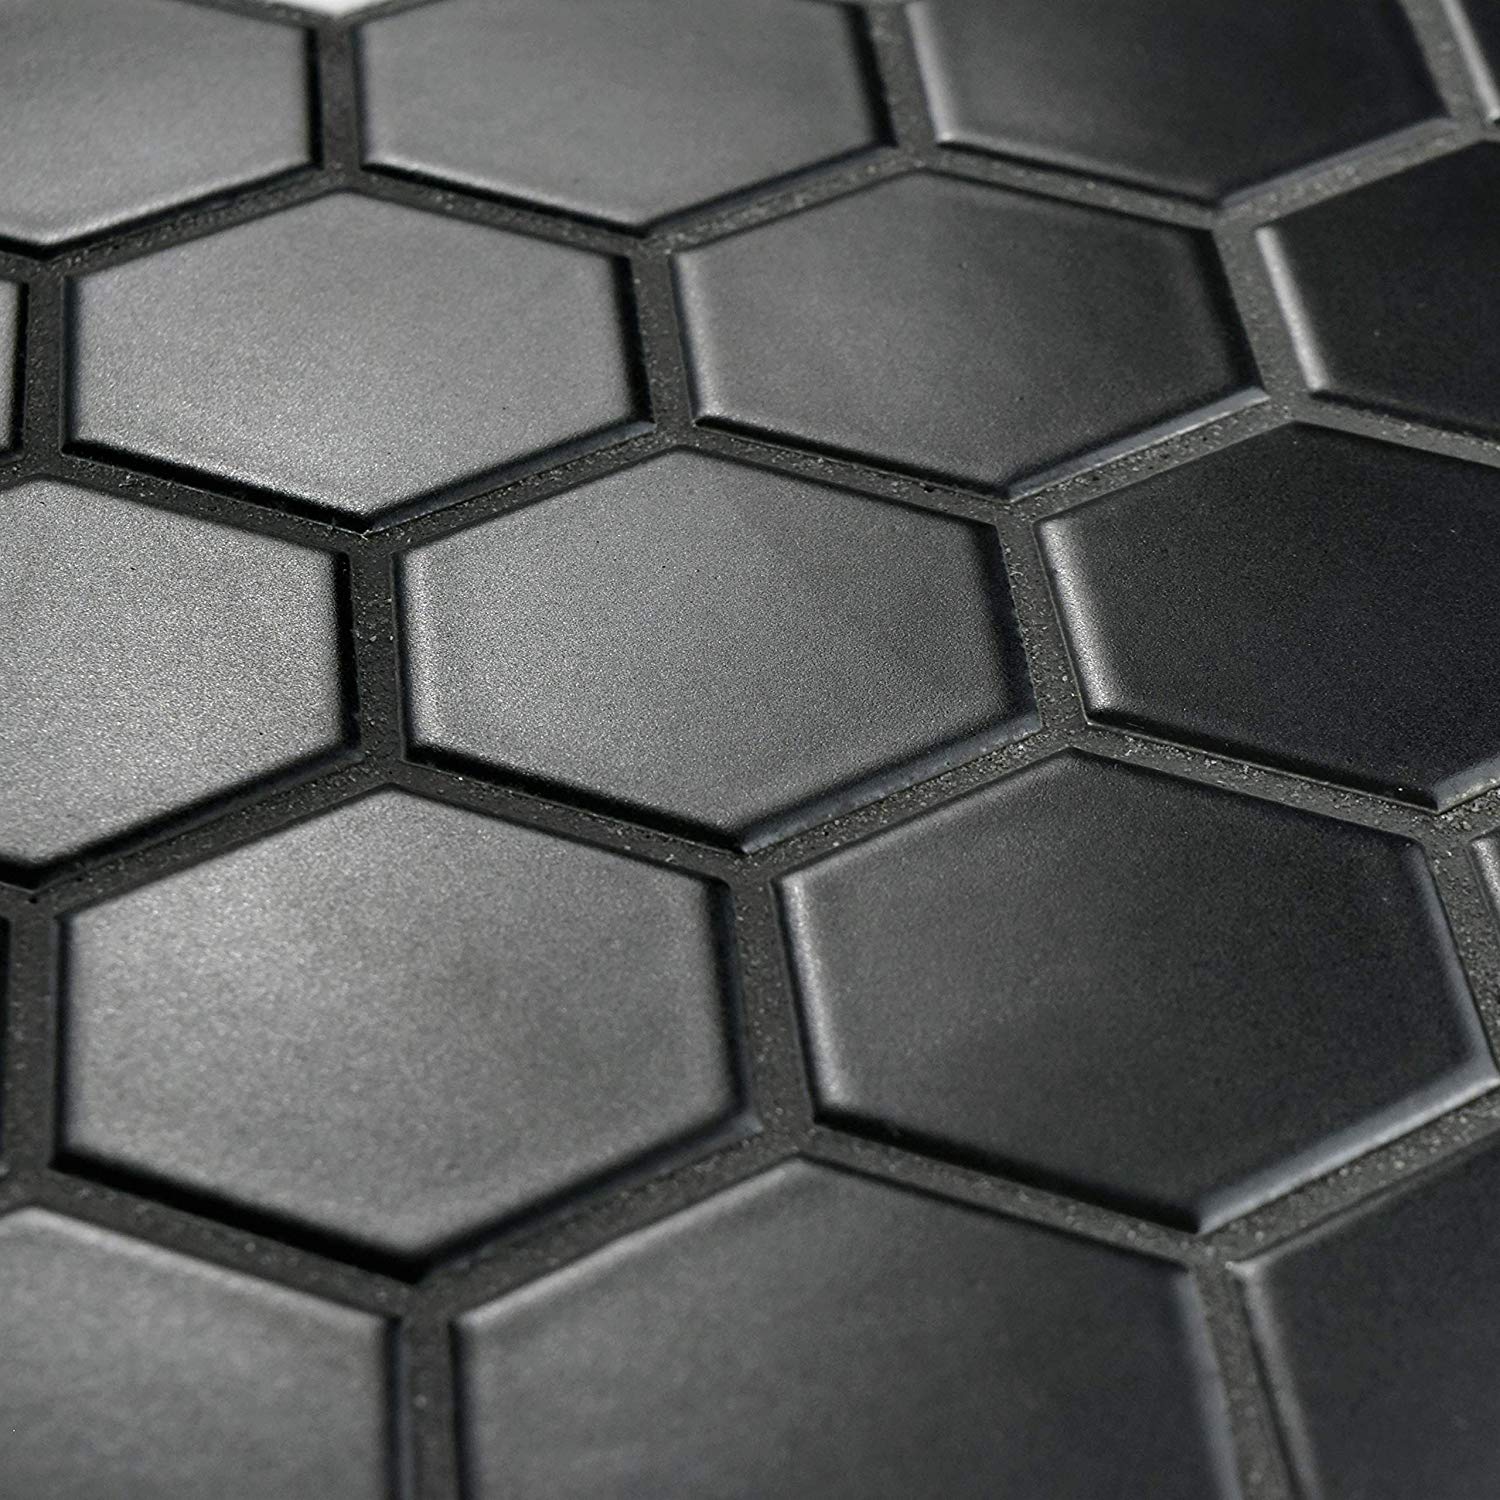 Black 2 Inch Hexagon Mosaic matte Wall Floor Tile, 10 pieces (10 Sqft)